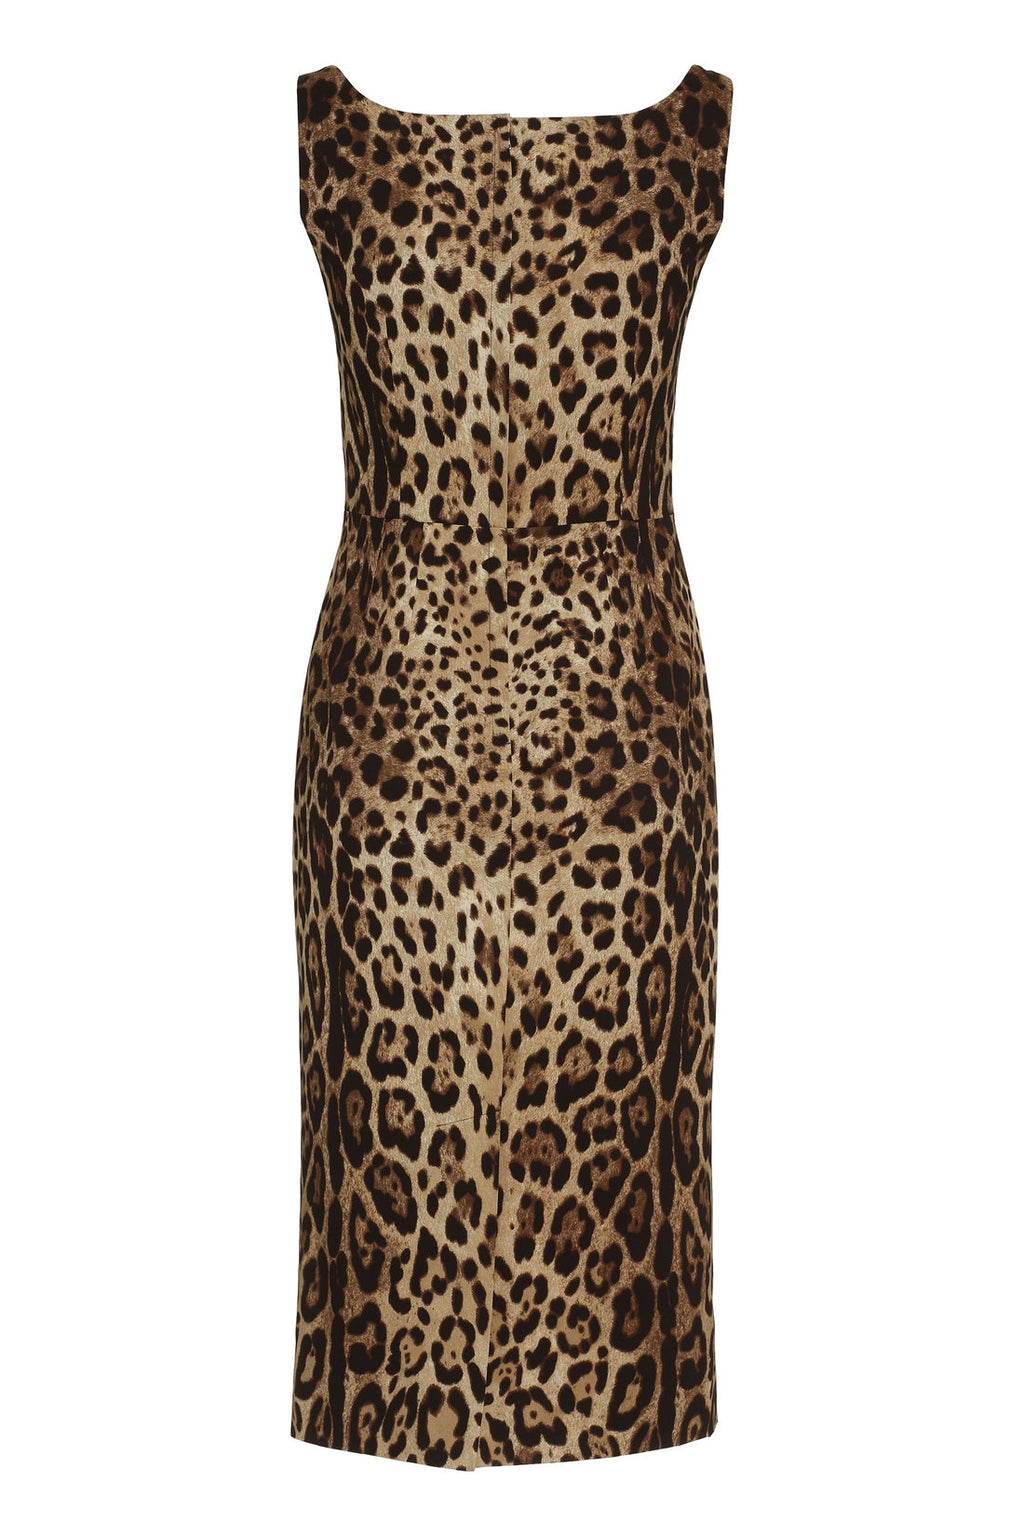 Dolce & Gabbana-OUTLET-SALE-Printed silk dress-ARCHIVIST